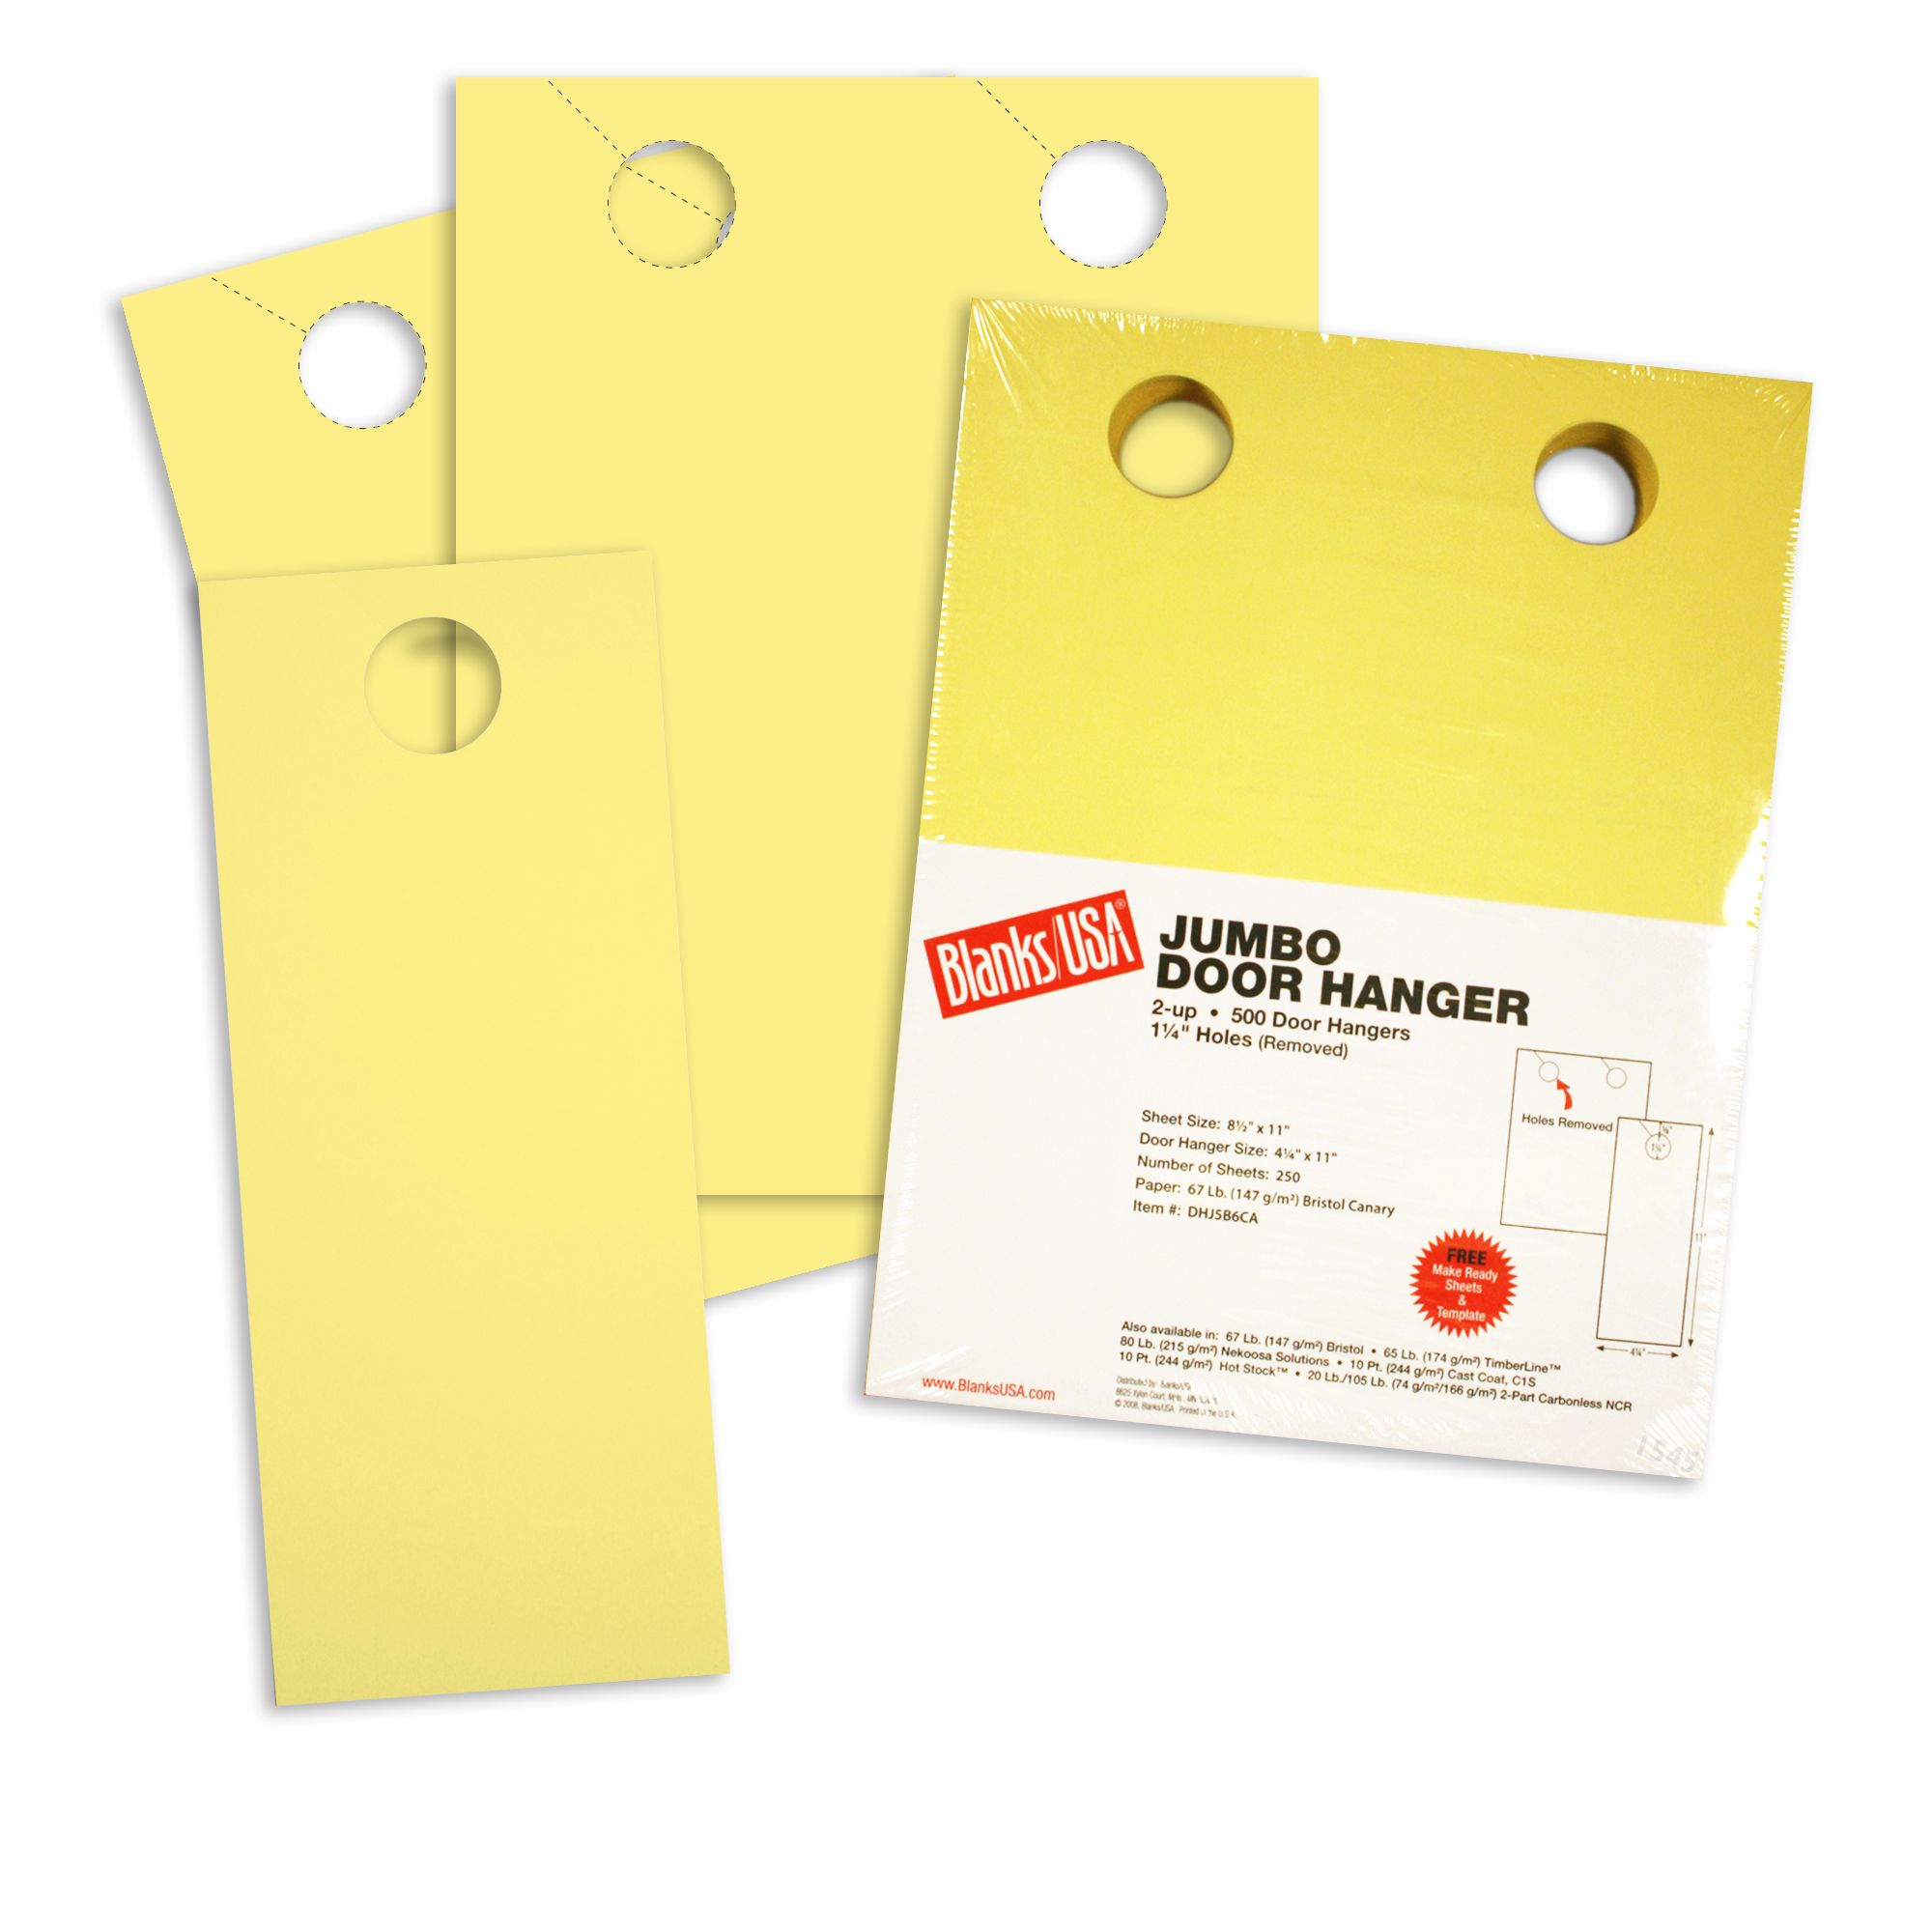 Blanks USA Canary Yellow Jumbo Door Hangers - 100 10/10 x 1010 in 10 lb Bristol  1050 per Package Regarding Blanks Usa Templates